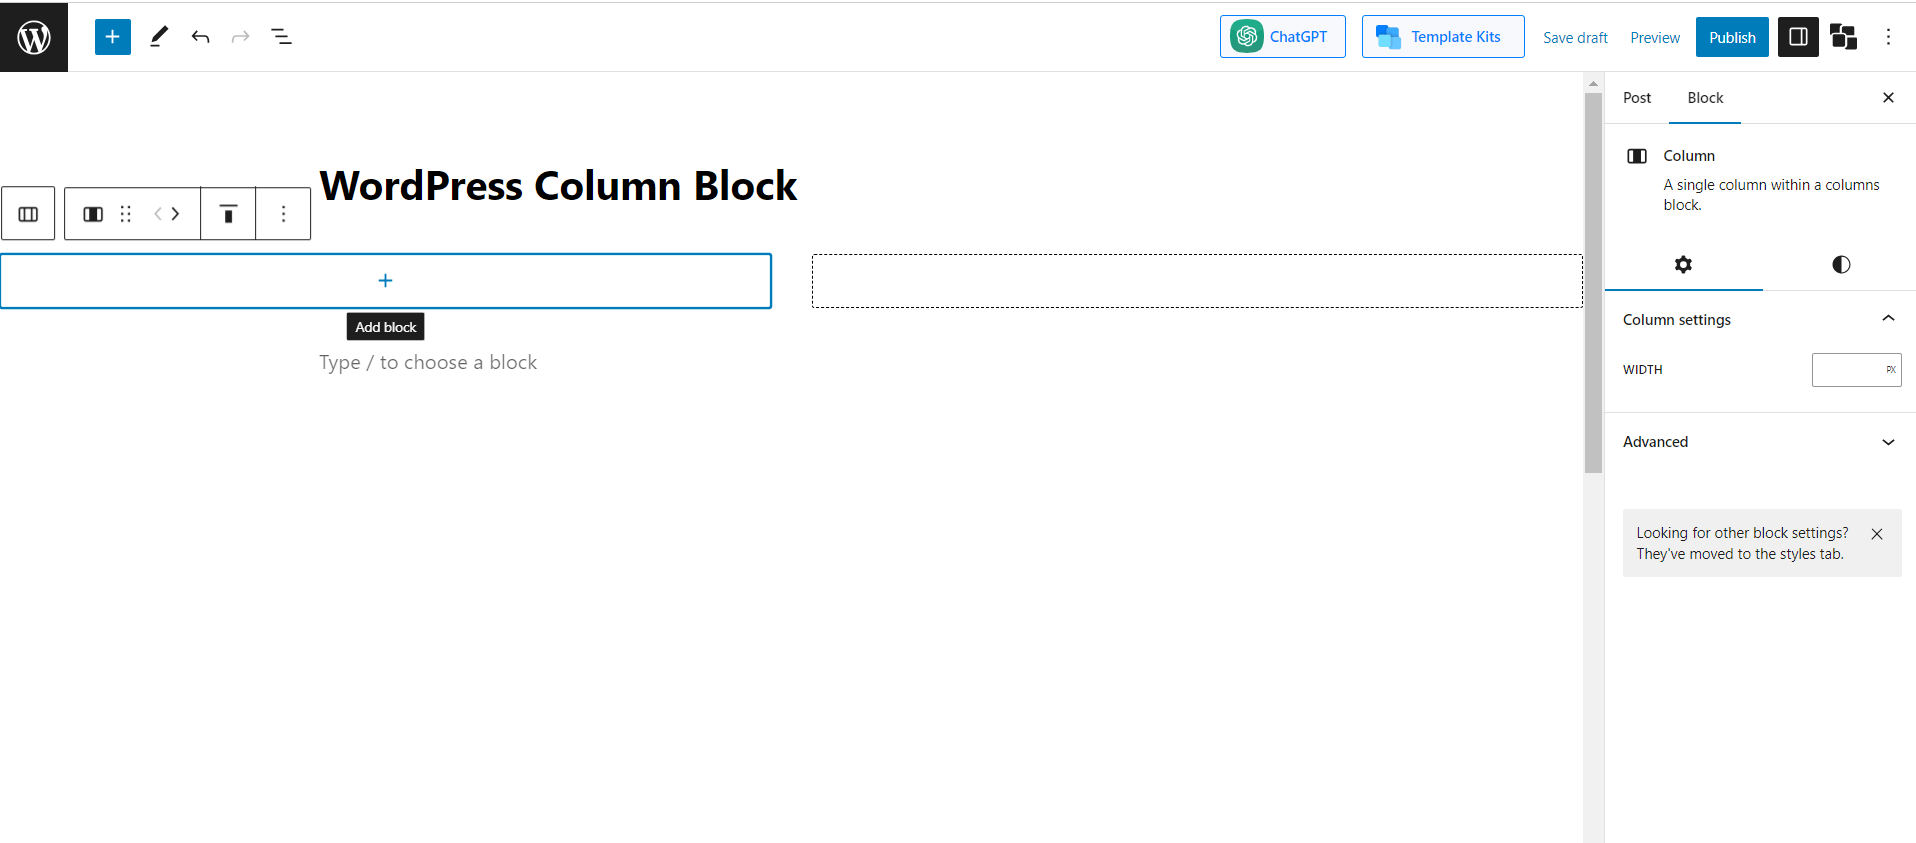 click on add block option